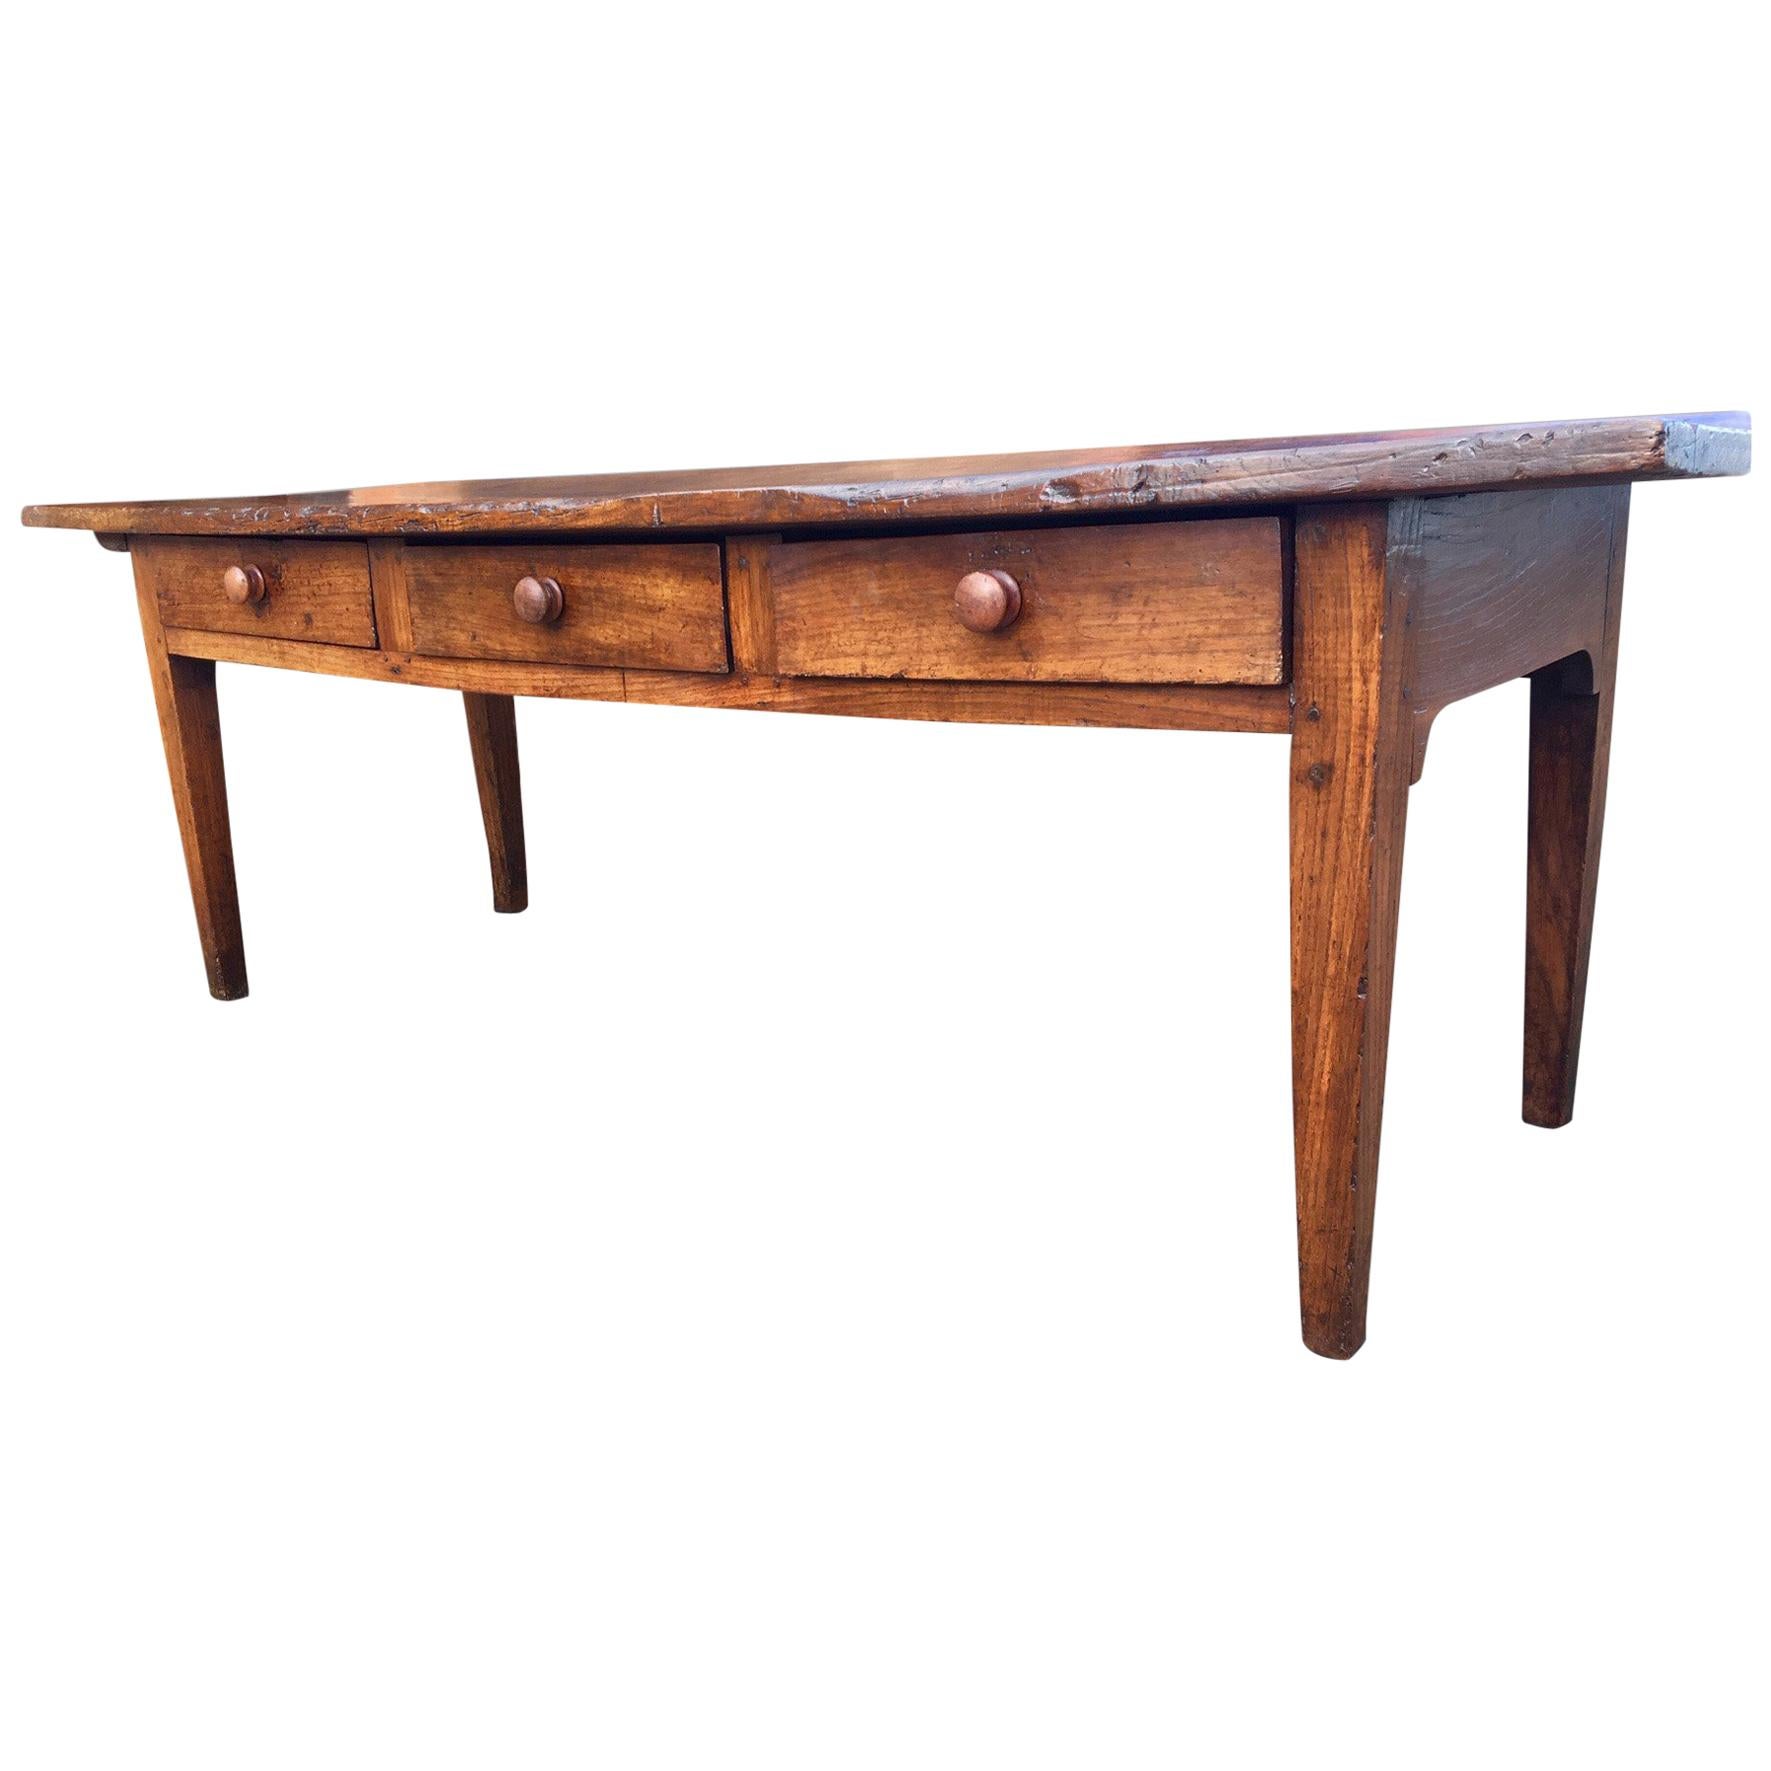  Dresser Base in Chestnut.  / Serving Table circa 1790